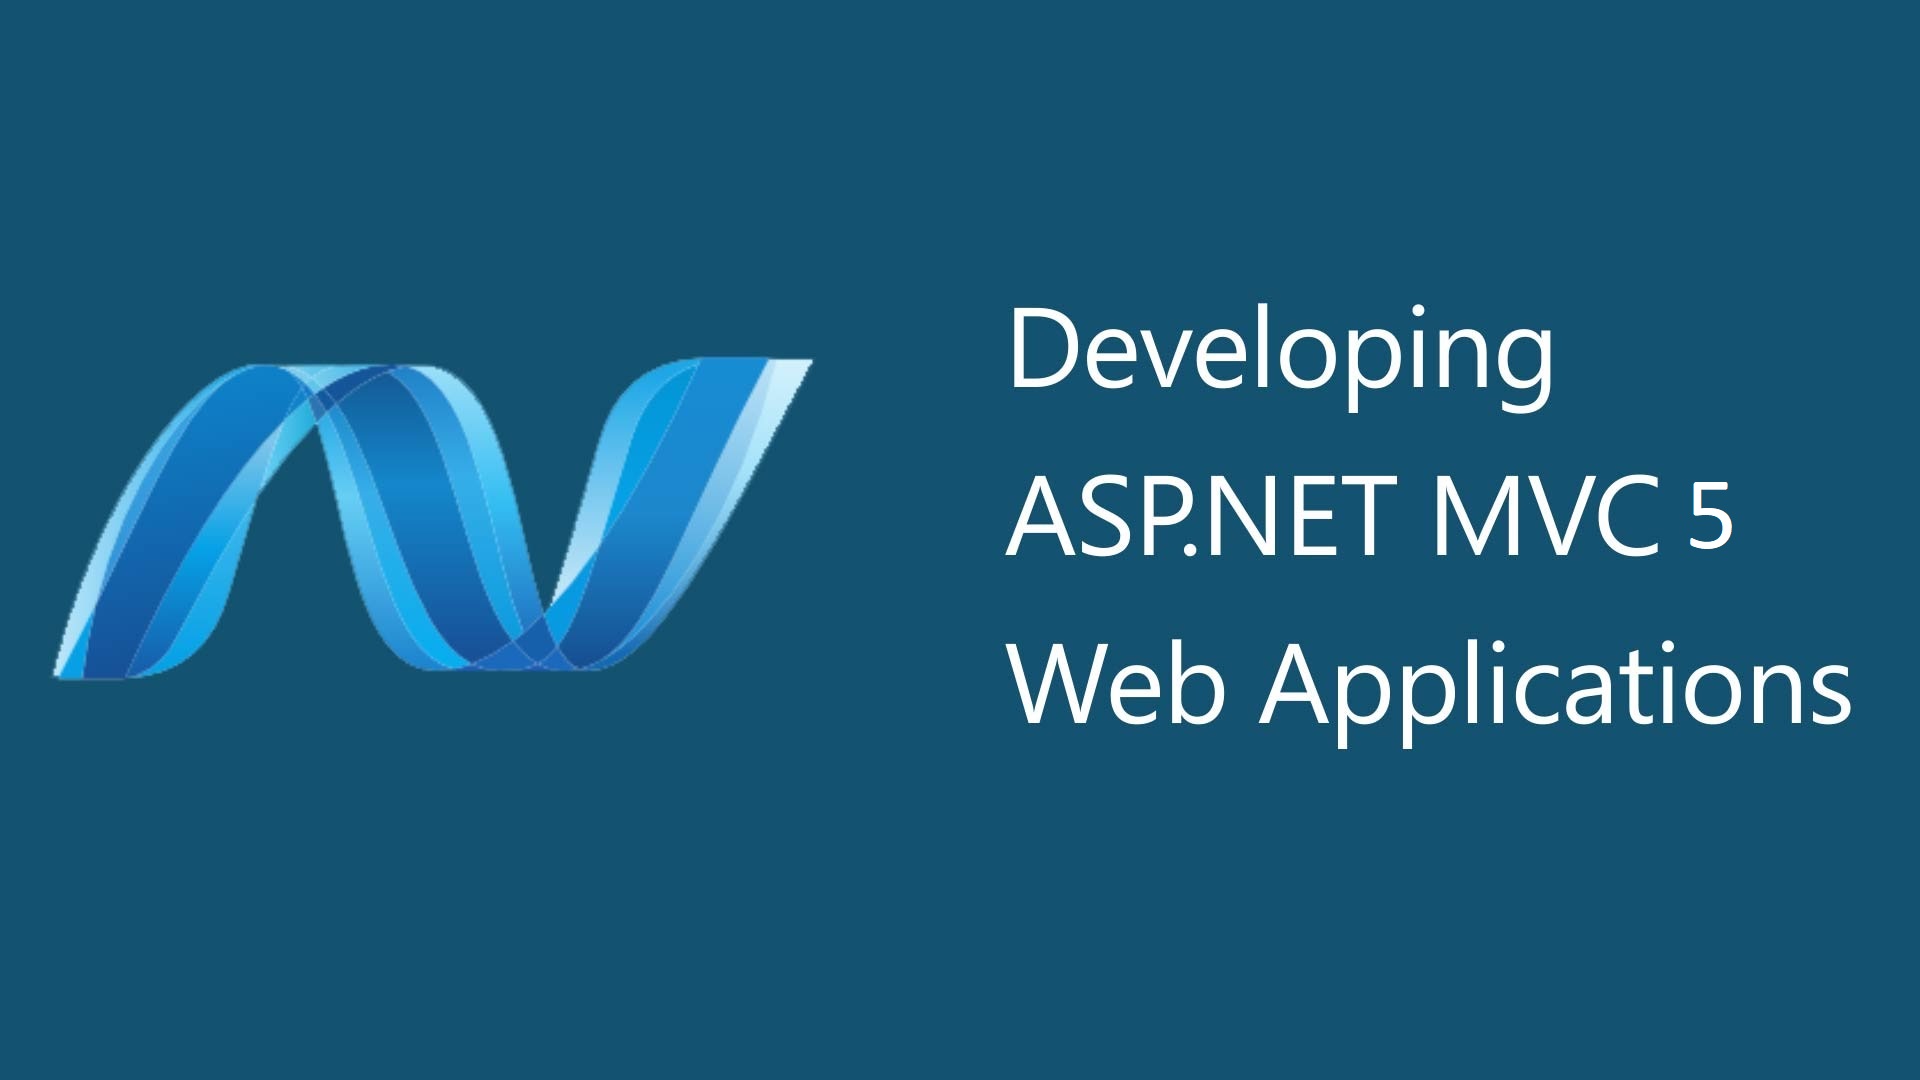 Developing ASP.NET MVC 5 Web Applications